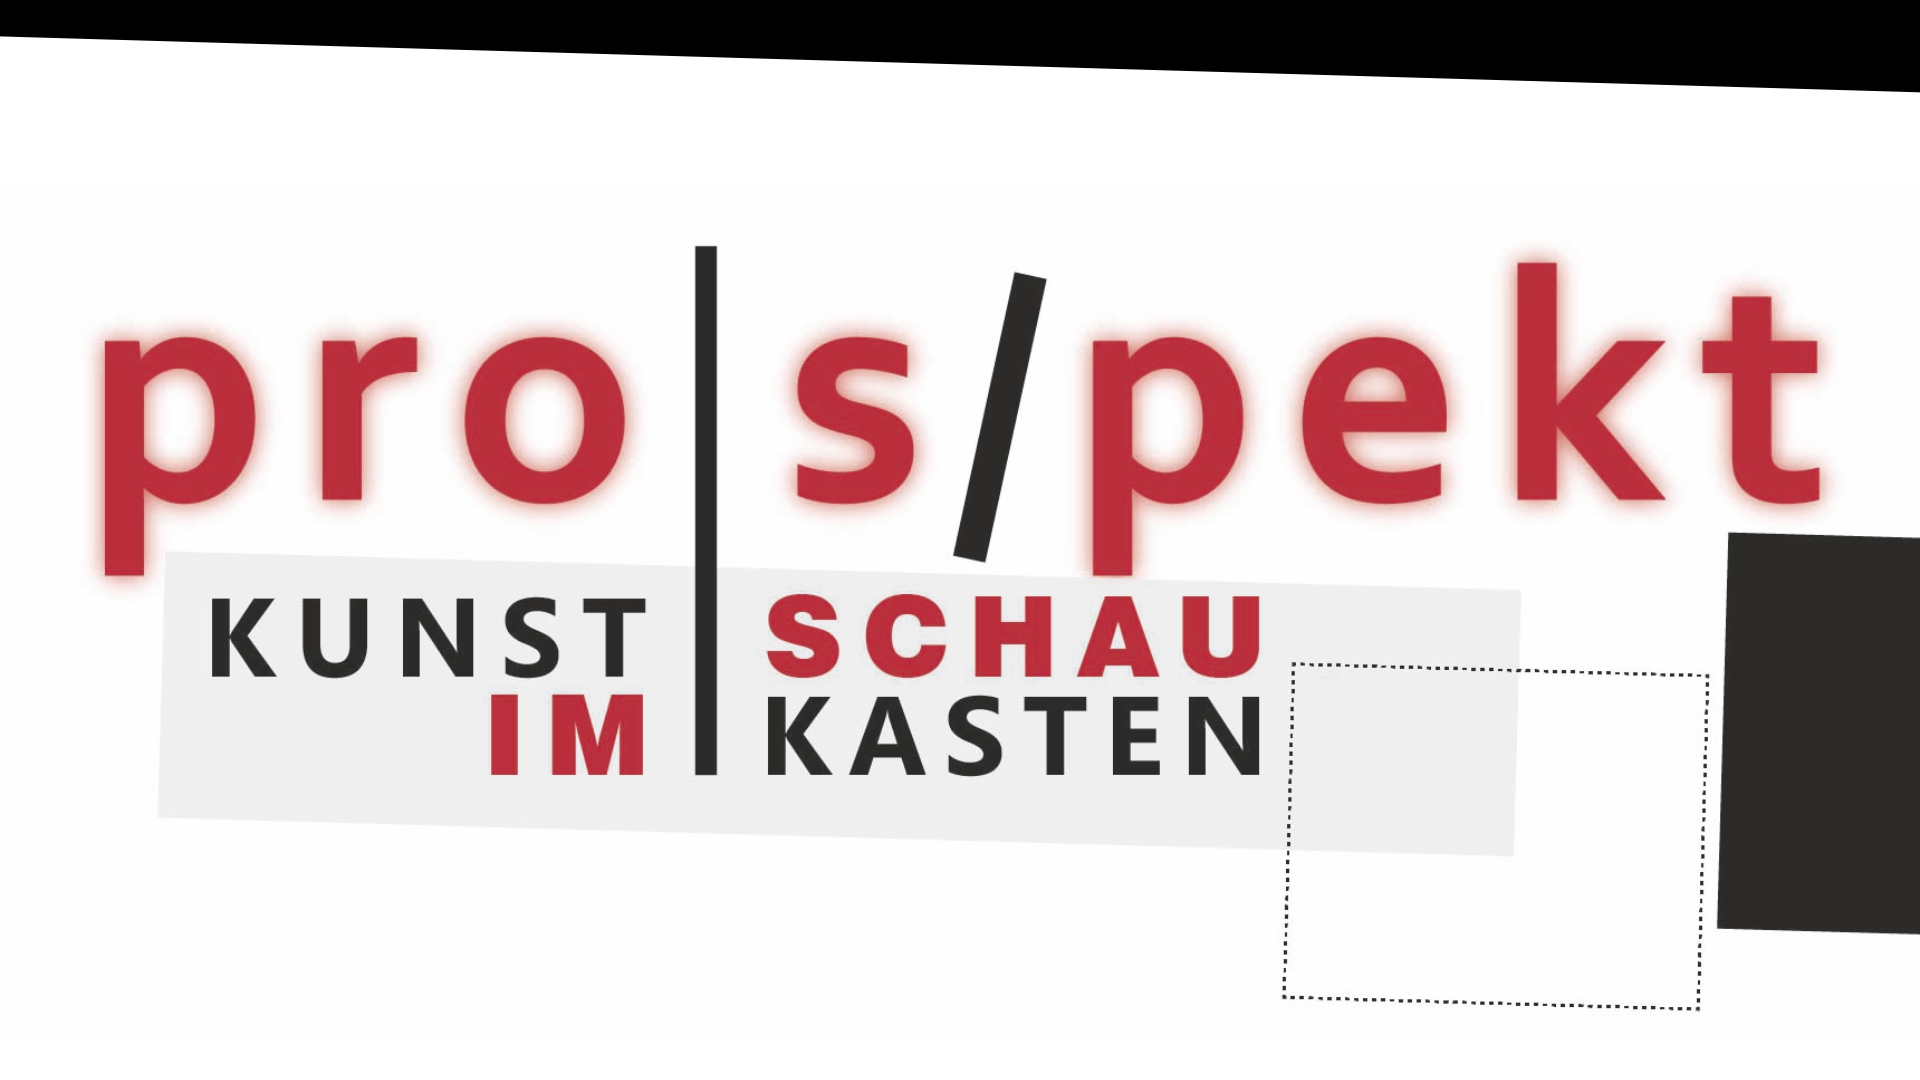 You are currently viewing Prospekt – Kunst im Kasten